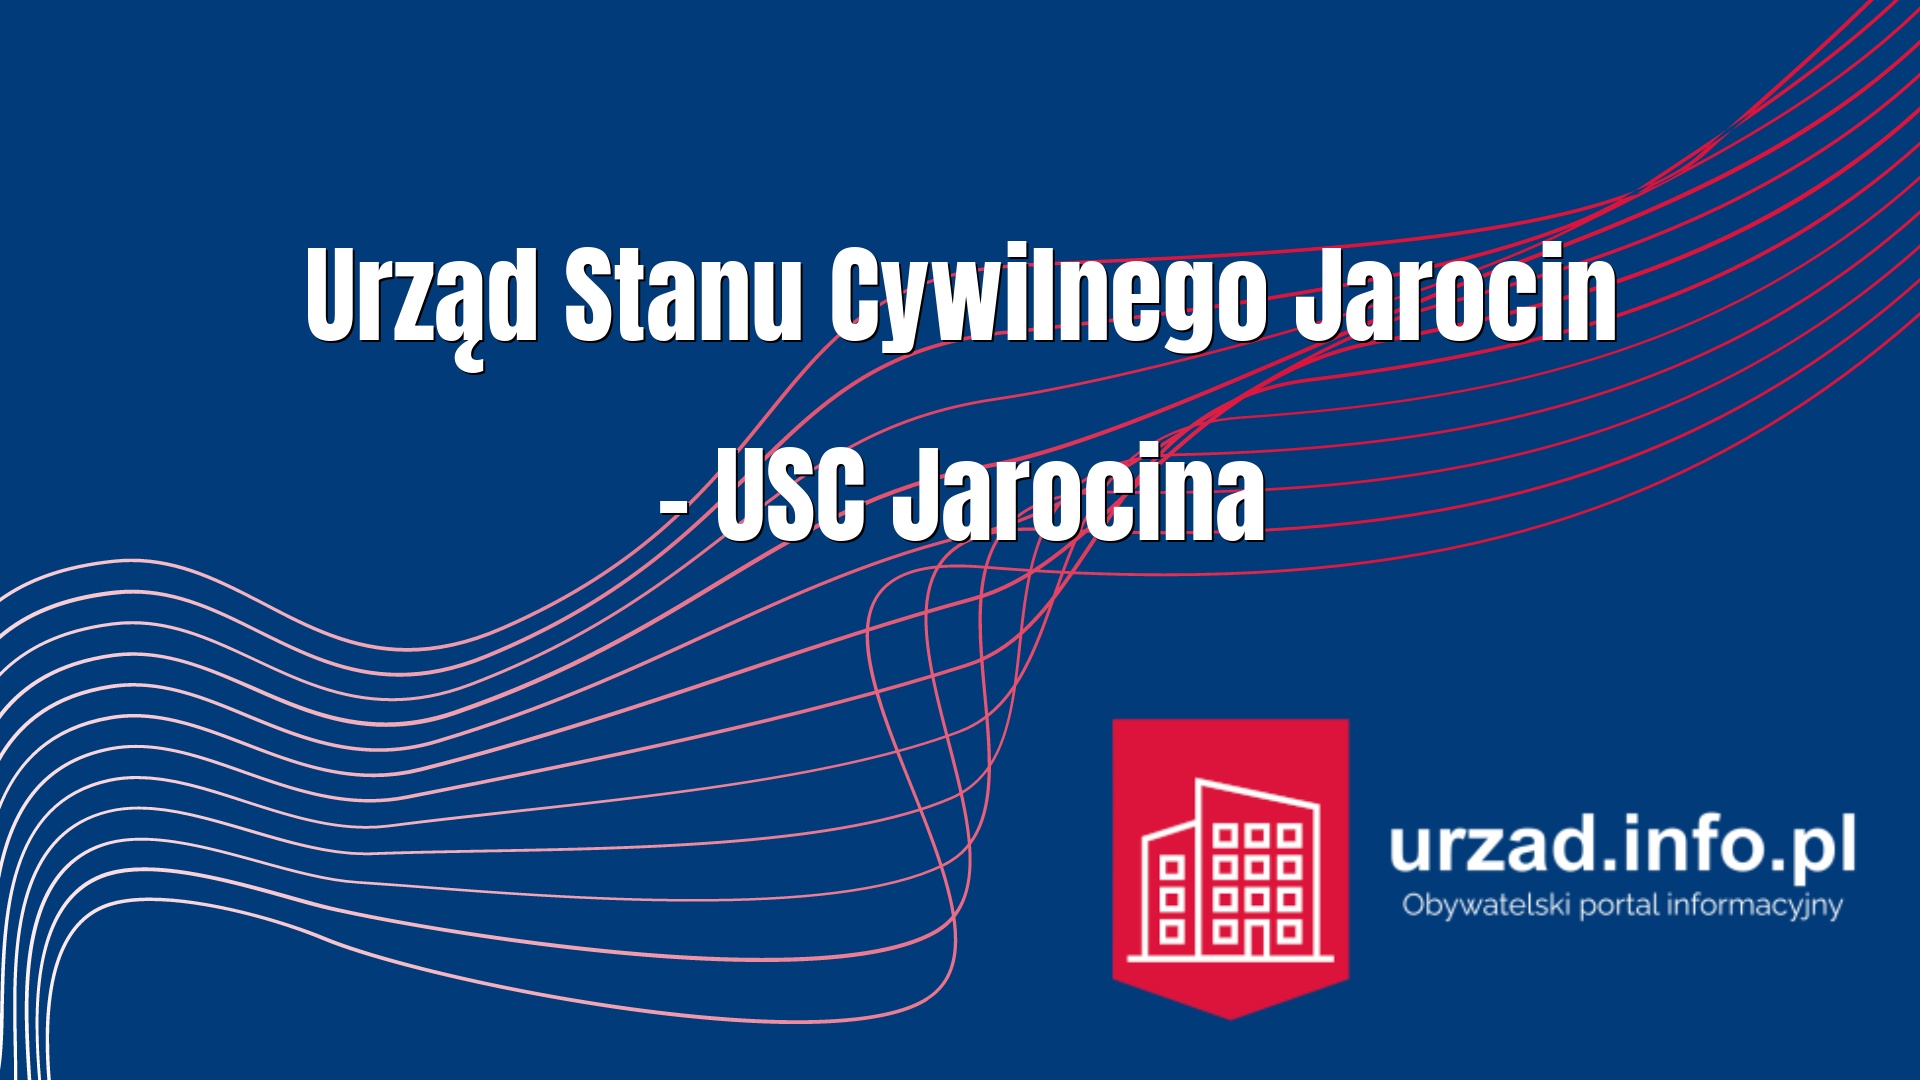 Urząd Stanu Cywilnego Jarocin – USC Jarocina